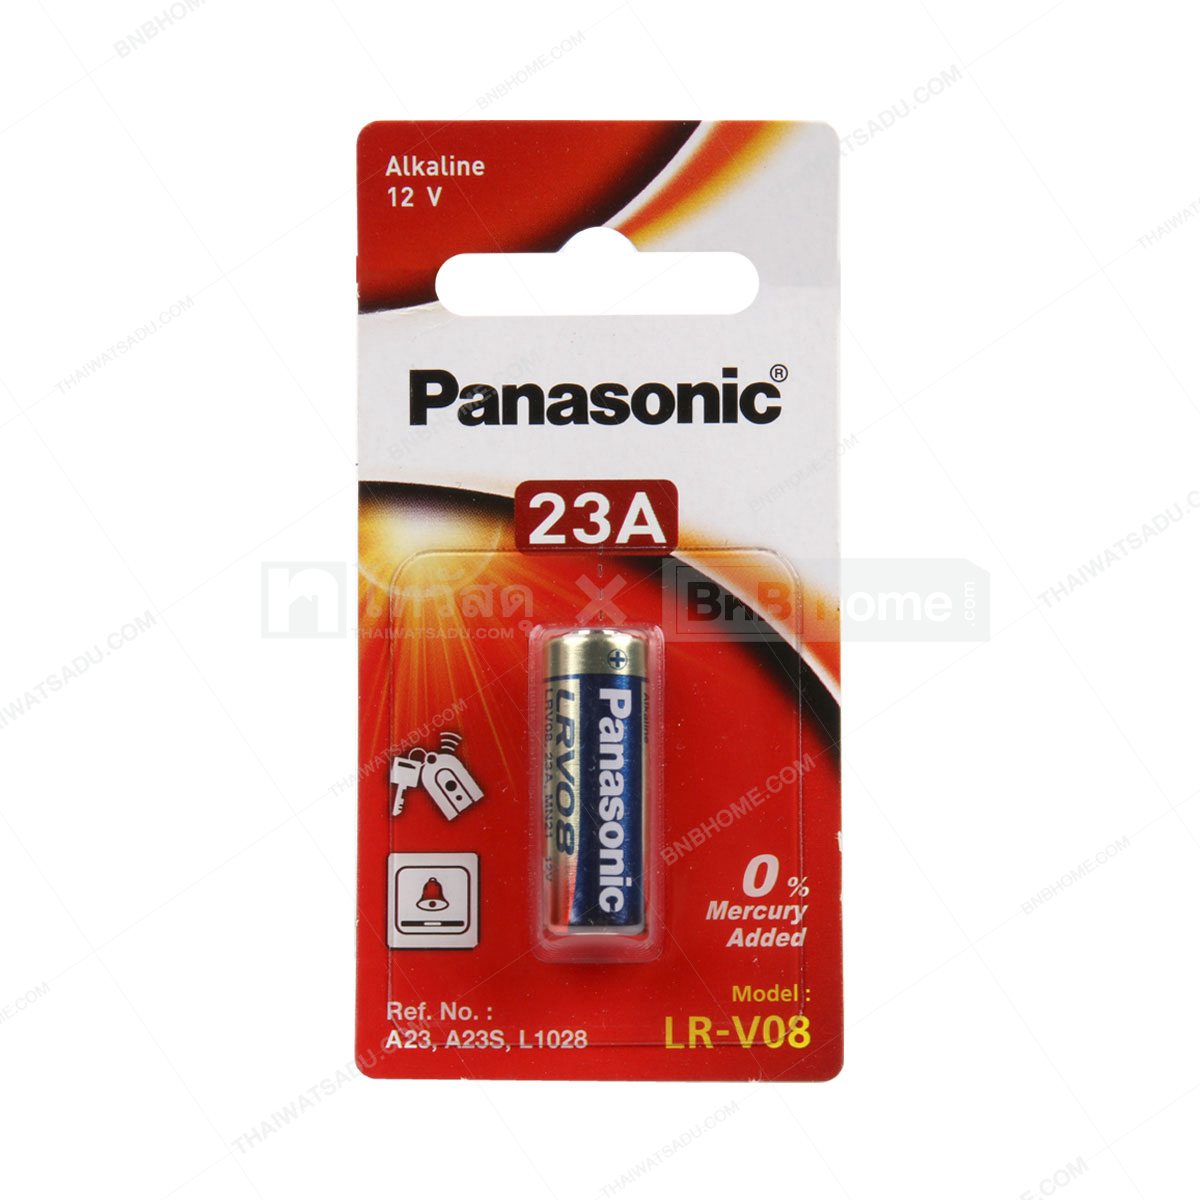 Panasonic LRV08 Battery